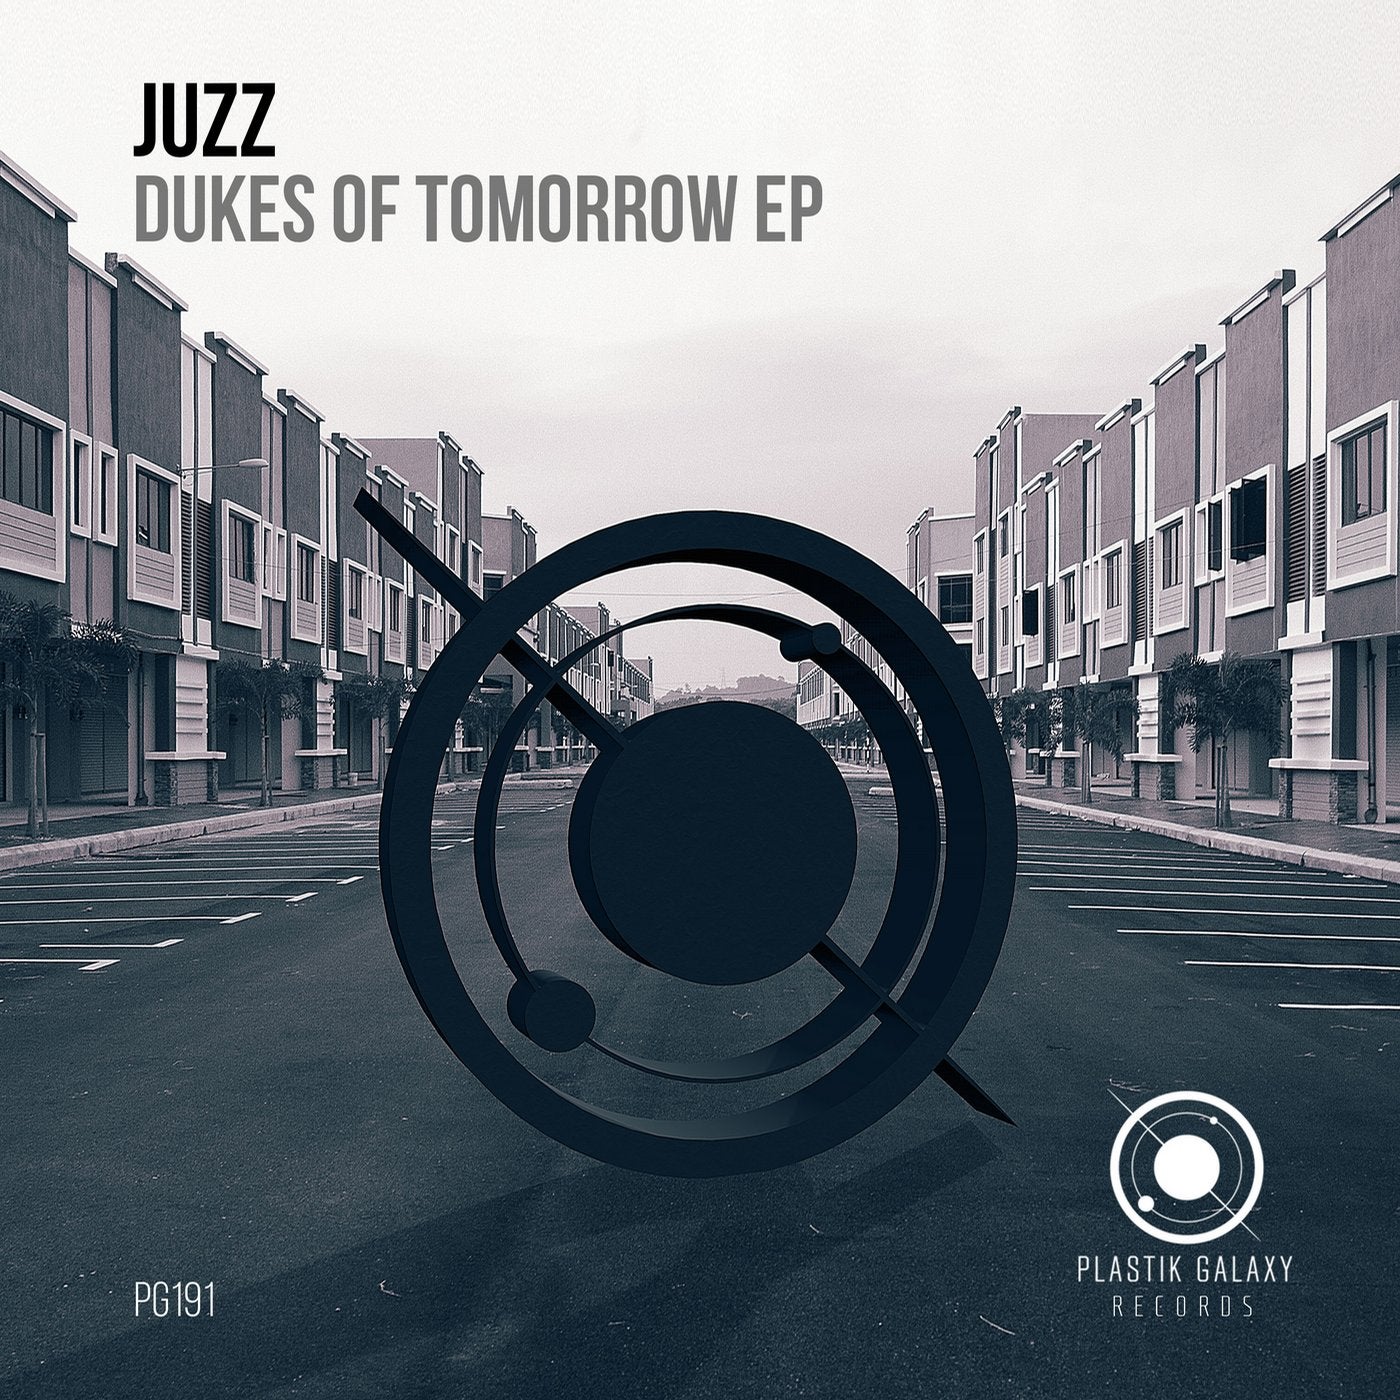 Dukes of Tomorrow EP